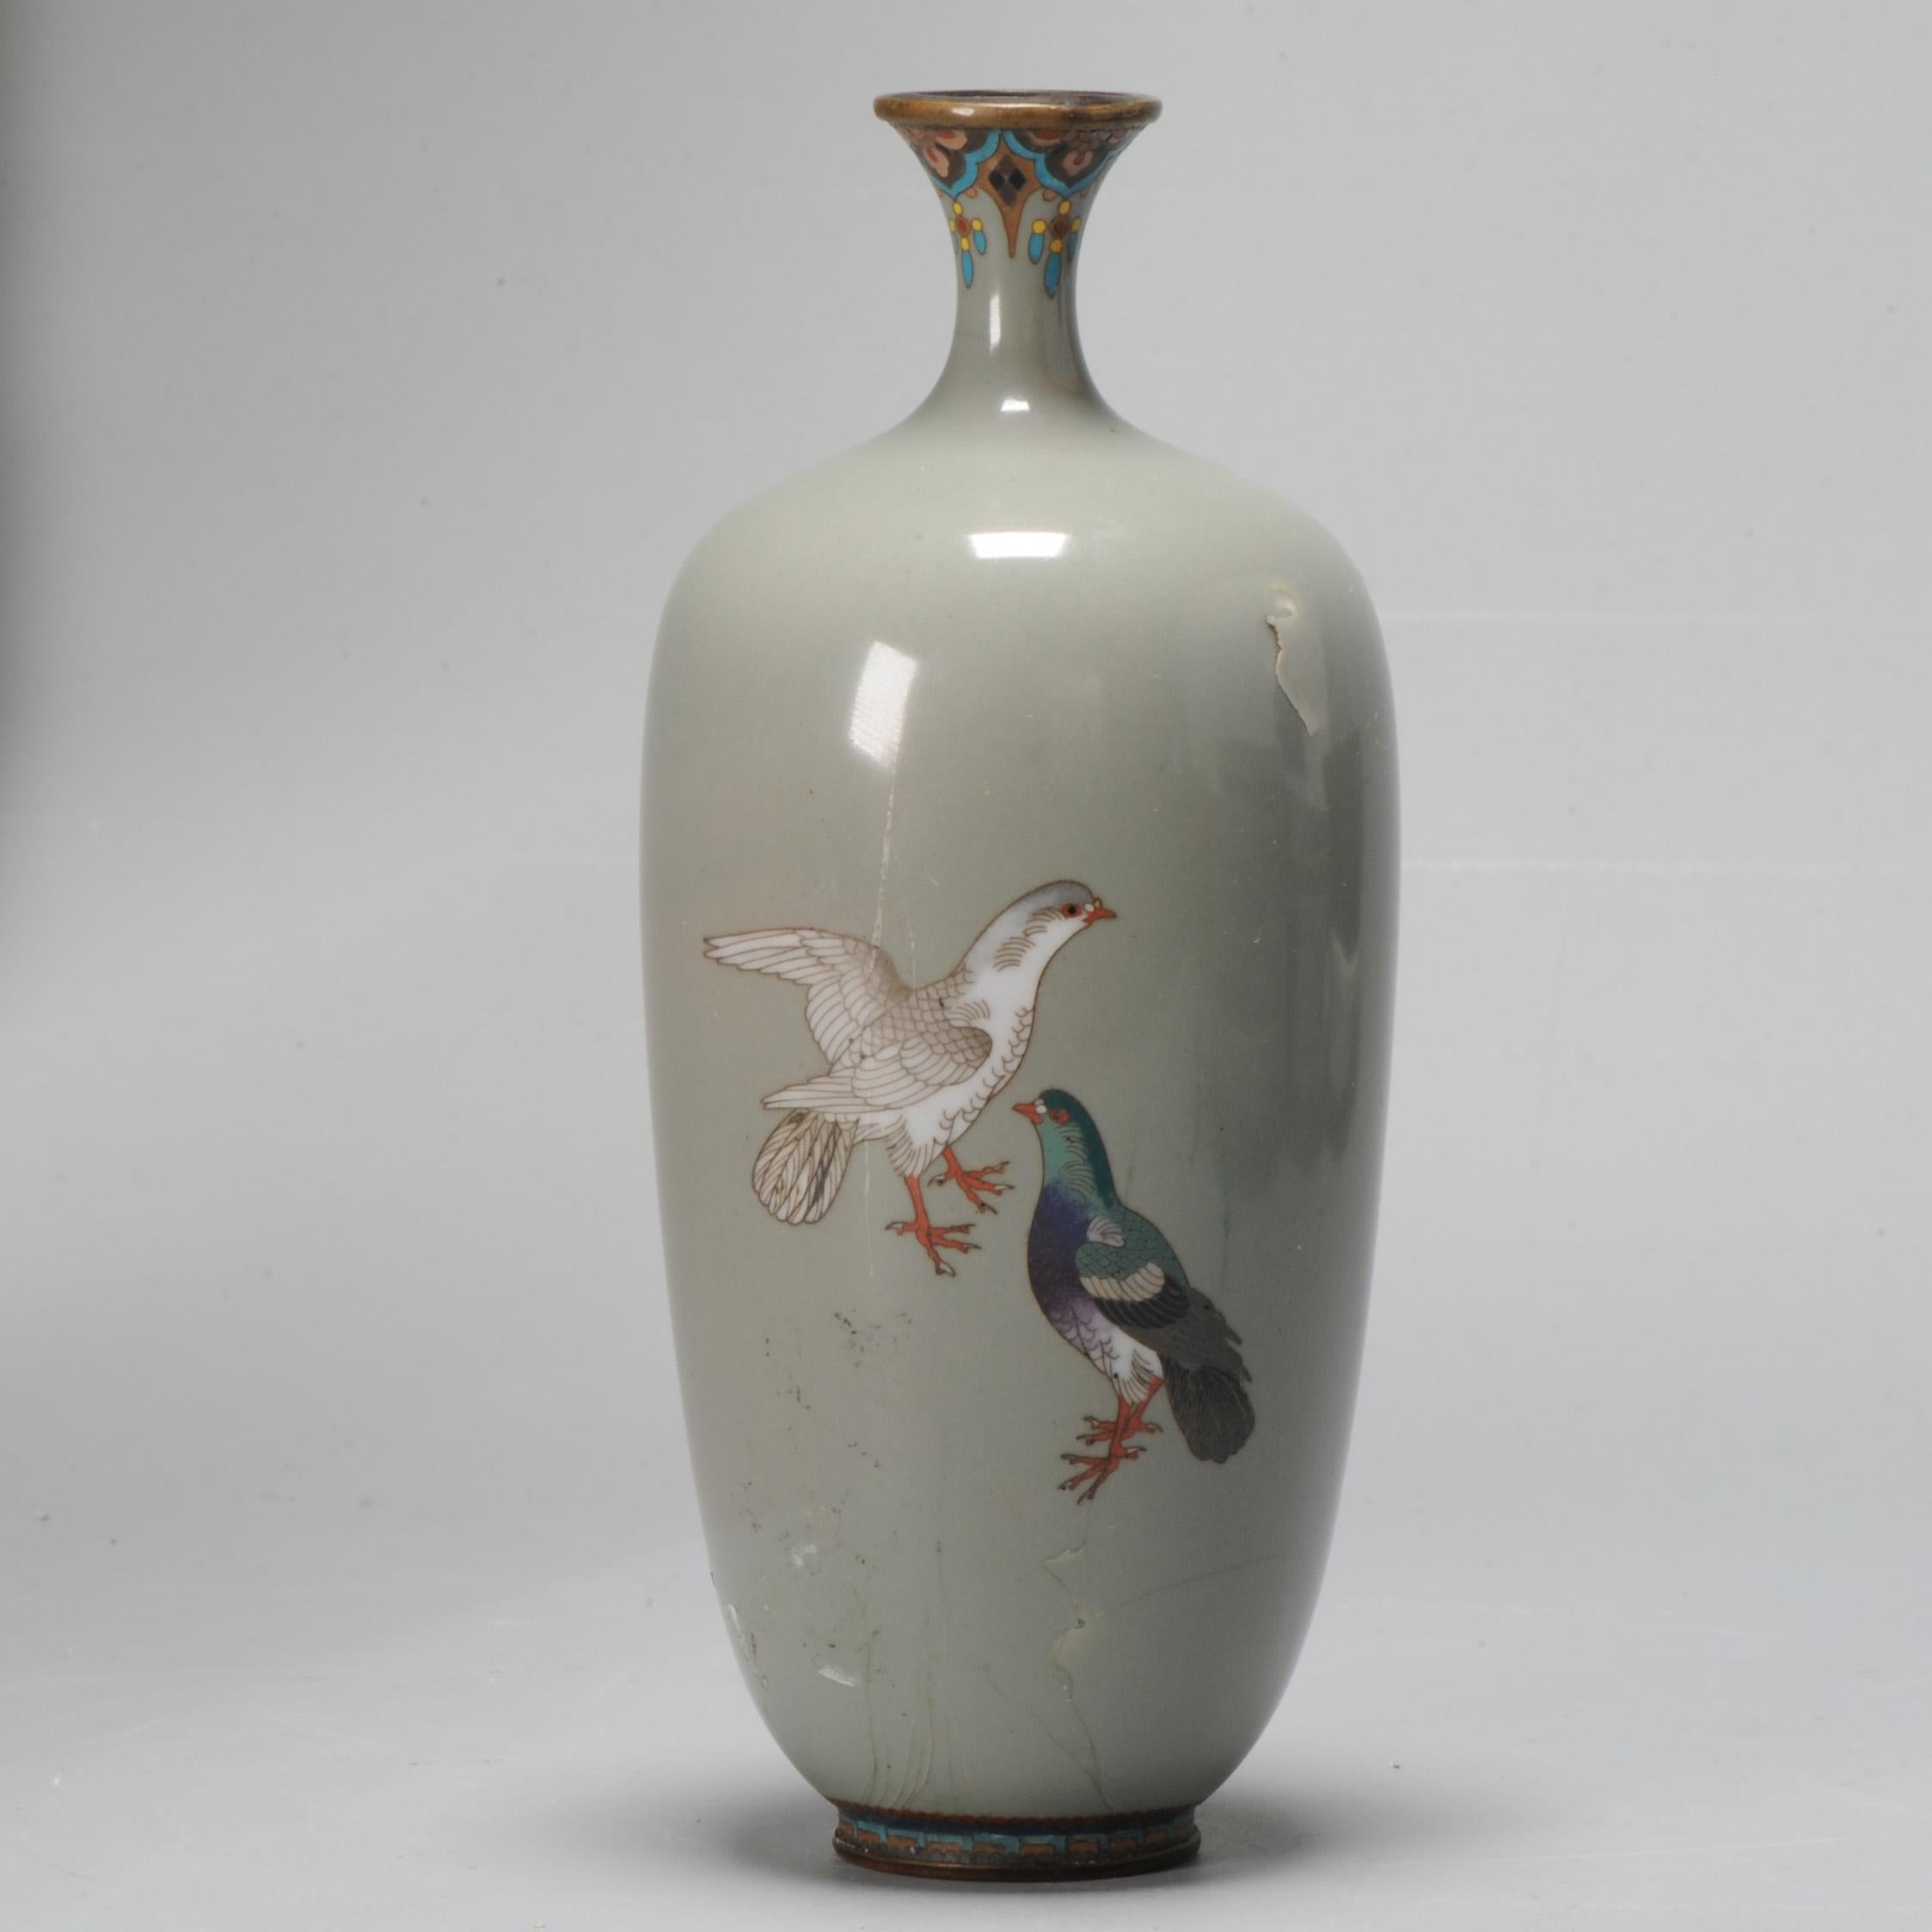 19th Century Small Vase with Birds Dove Pigeon Cloisonné Enamel Meiji Period '1868-1912' For Sale